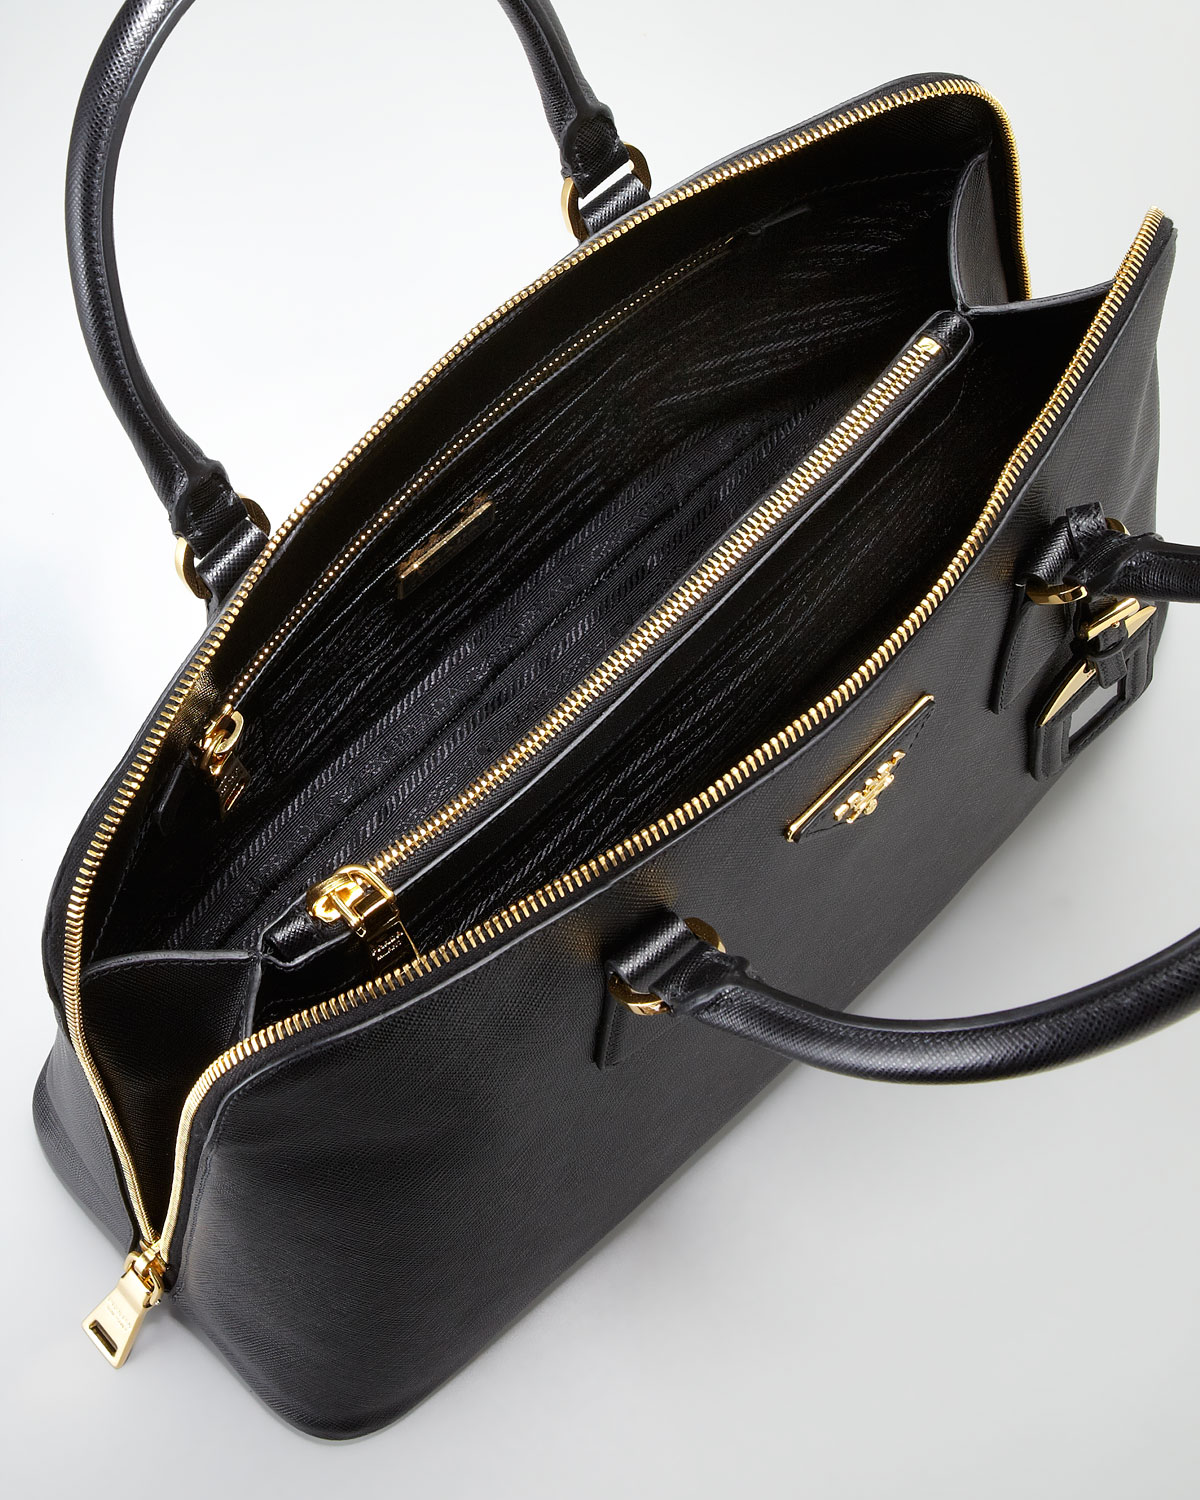 Lyst - Prada Satchel Bag in Black